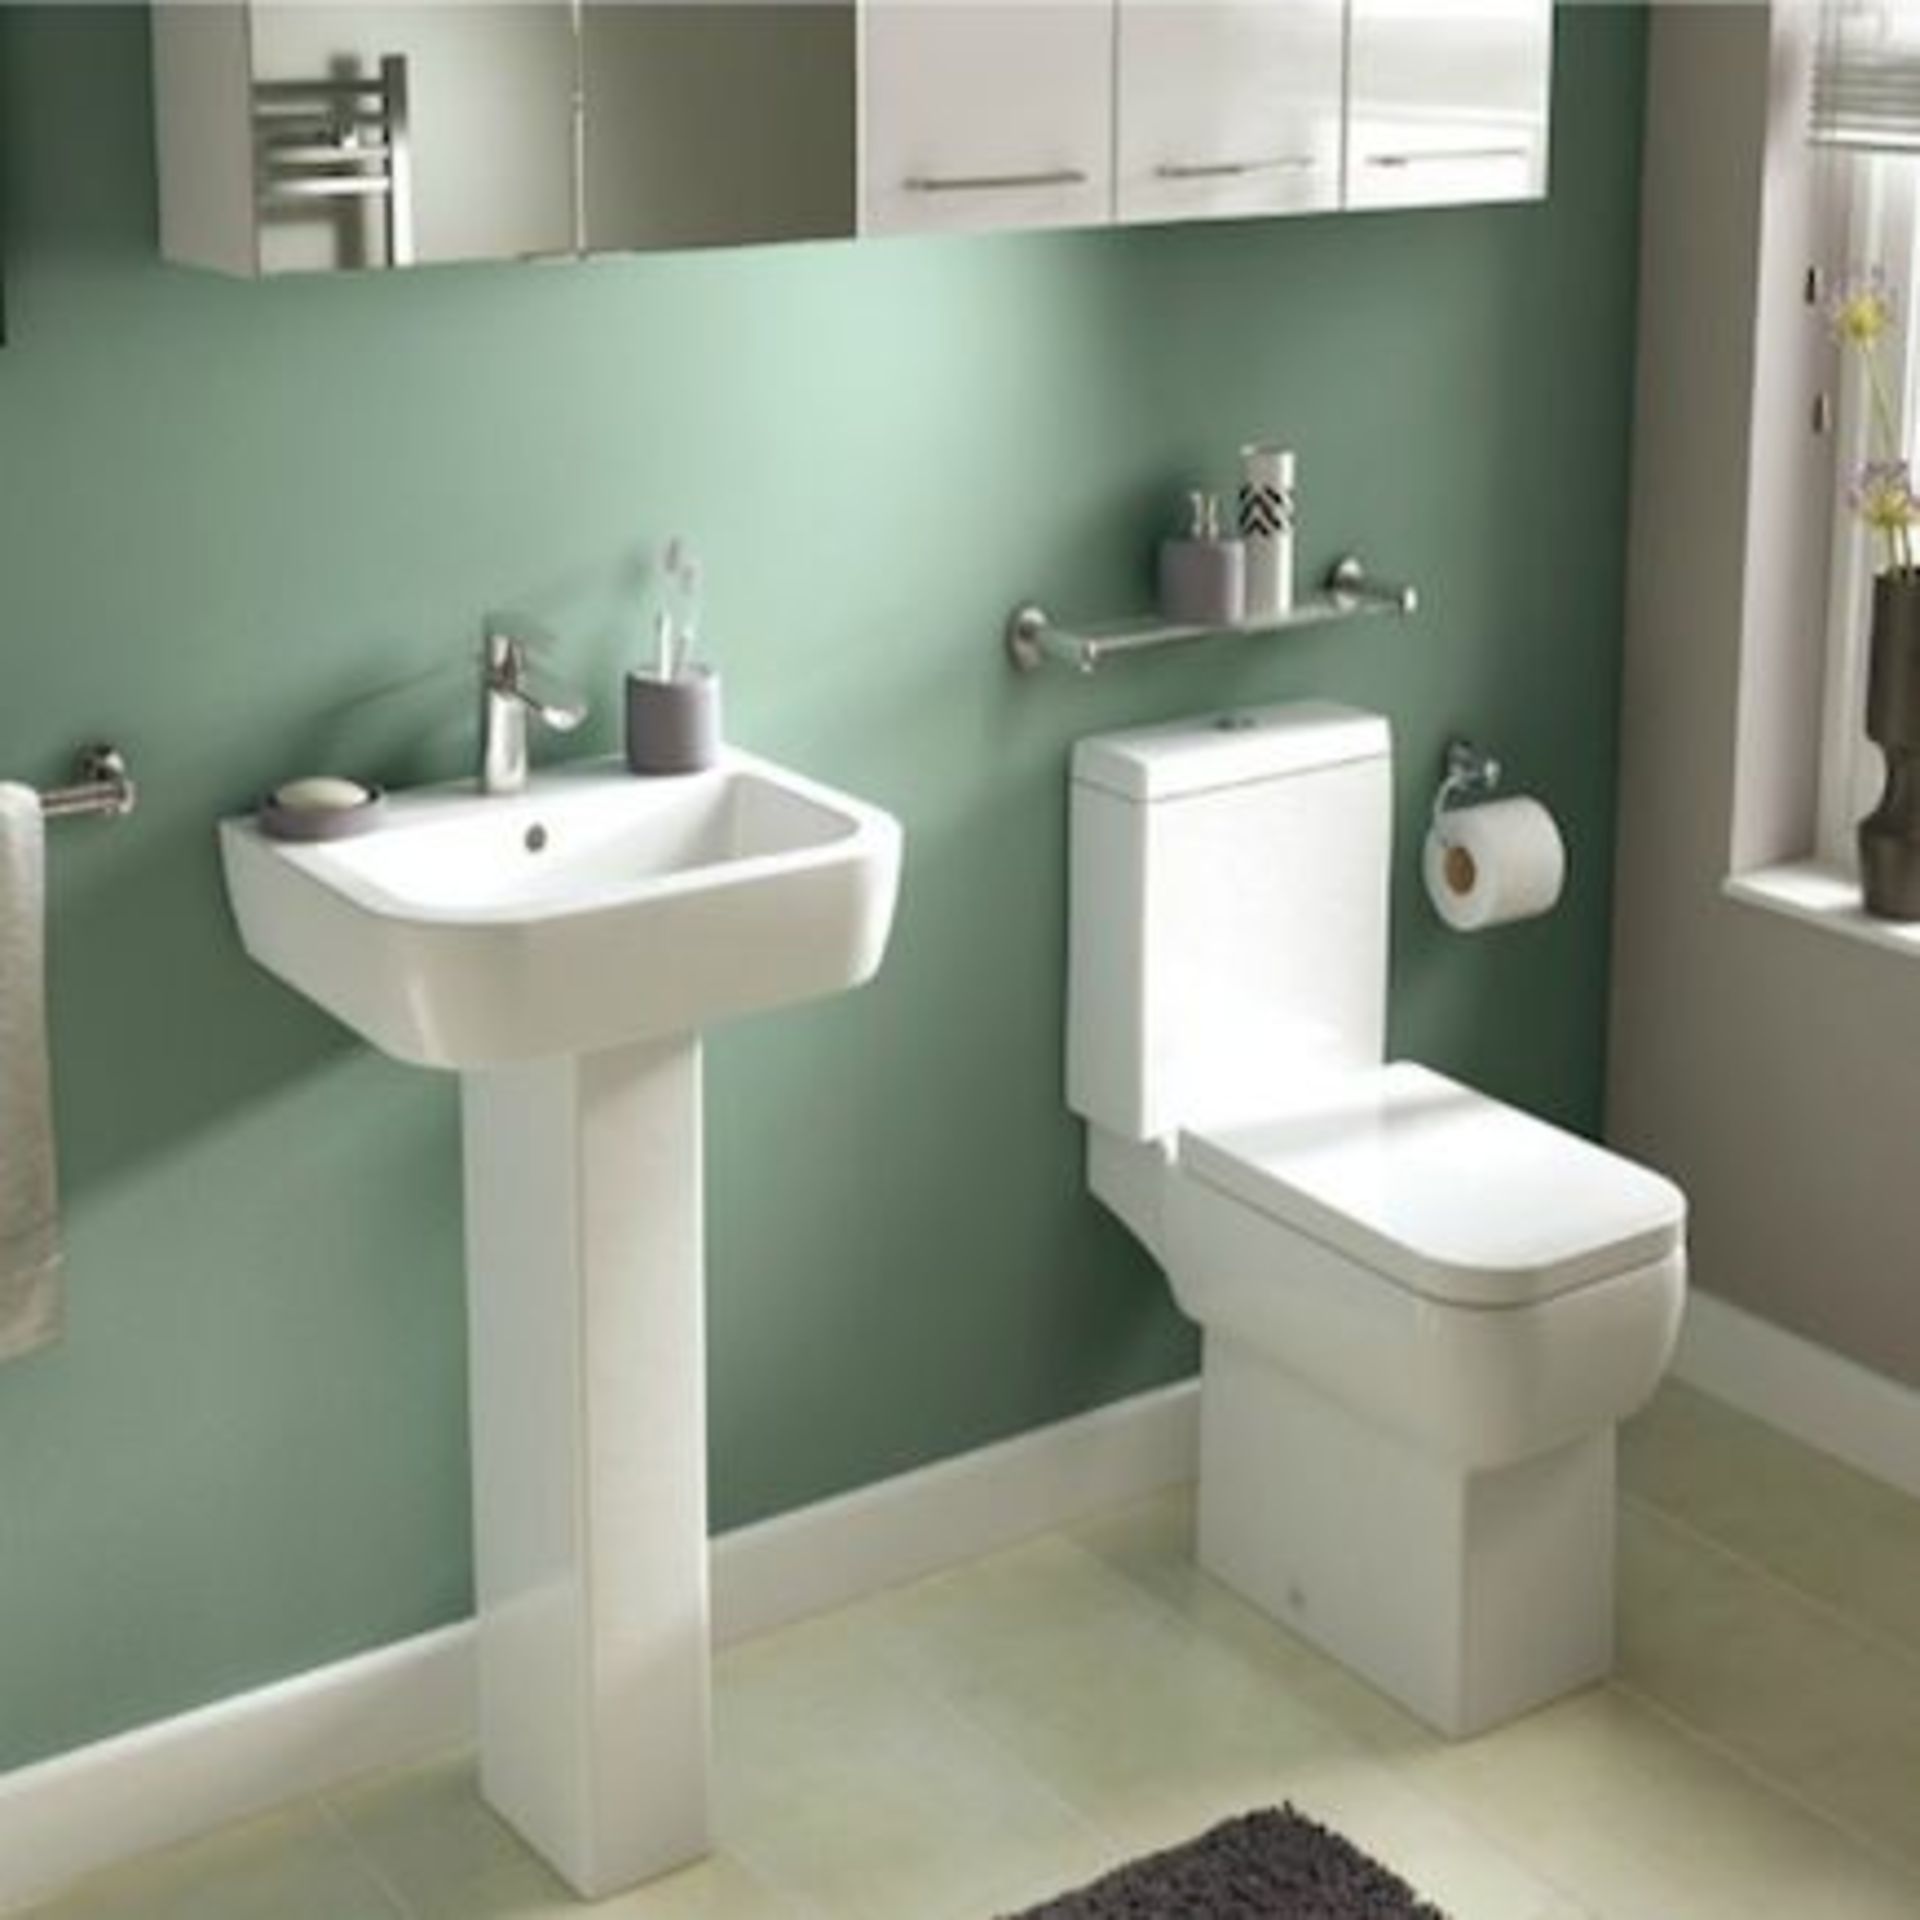 Fabian Toilet & Basin Set. Includes: Toilet, Cistern, Pedestal & Sink! RRP £399. Fantastic stylish